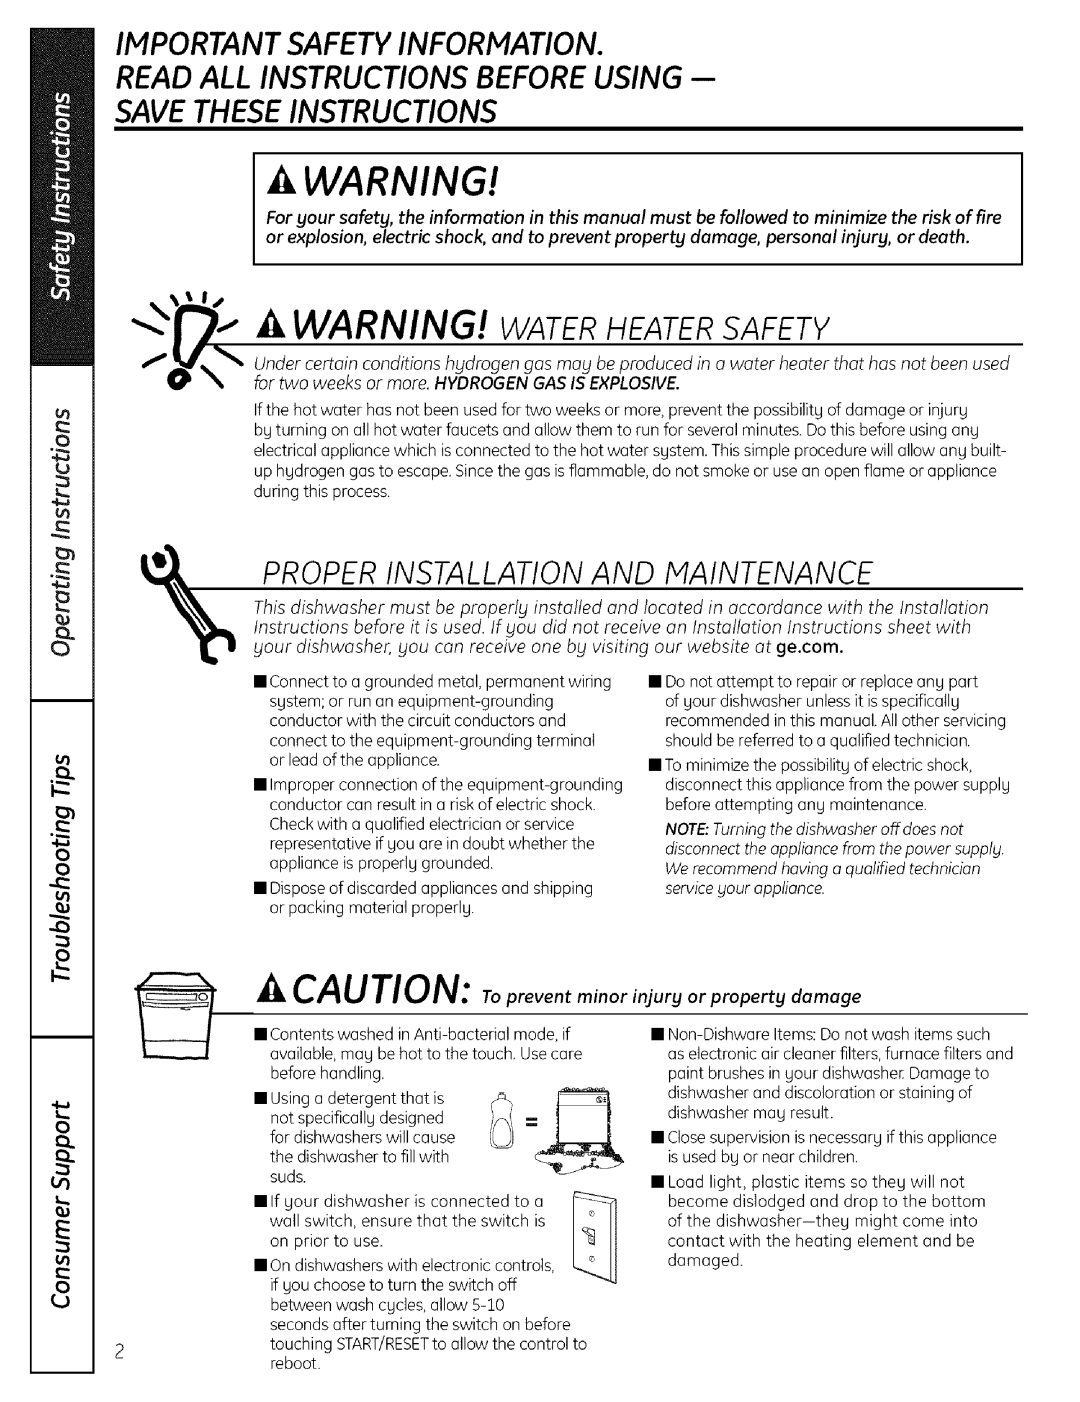 GE EDWSO00 manual Proper Installationand Maintenance, A Warning! Waterheatersafety, Important Safety Information 